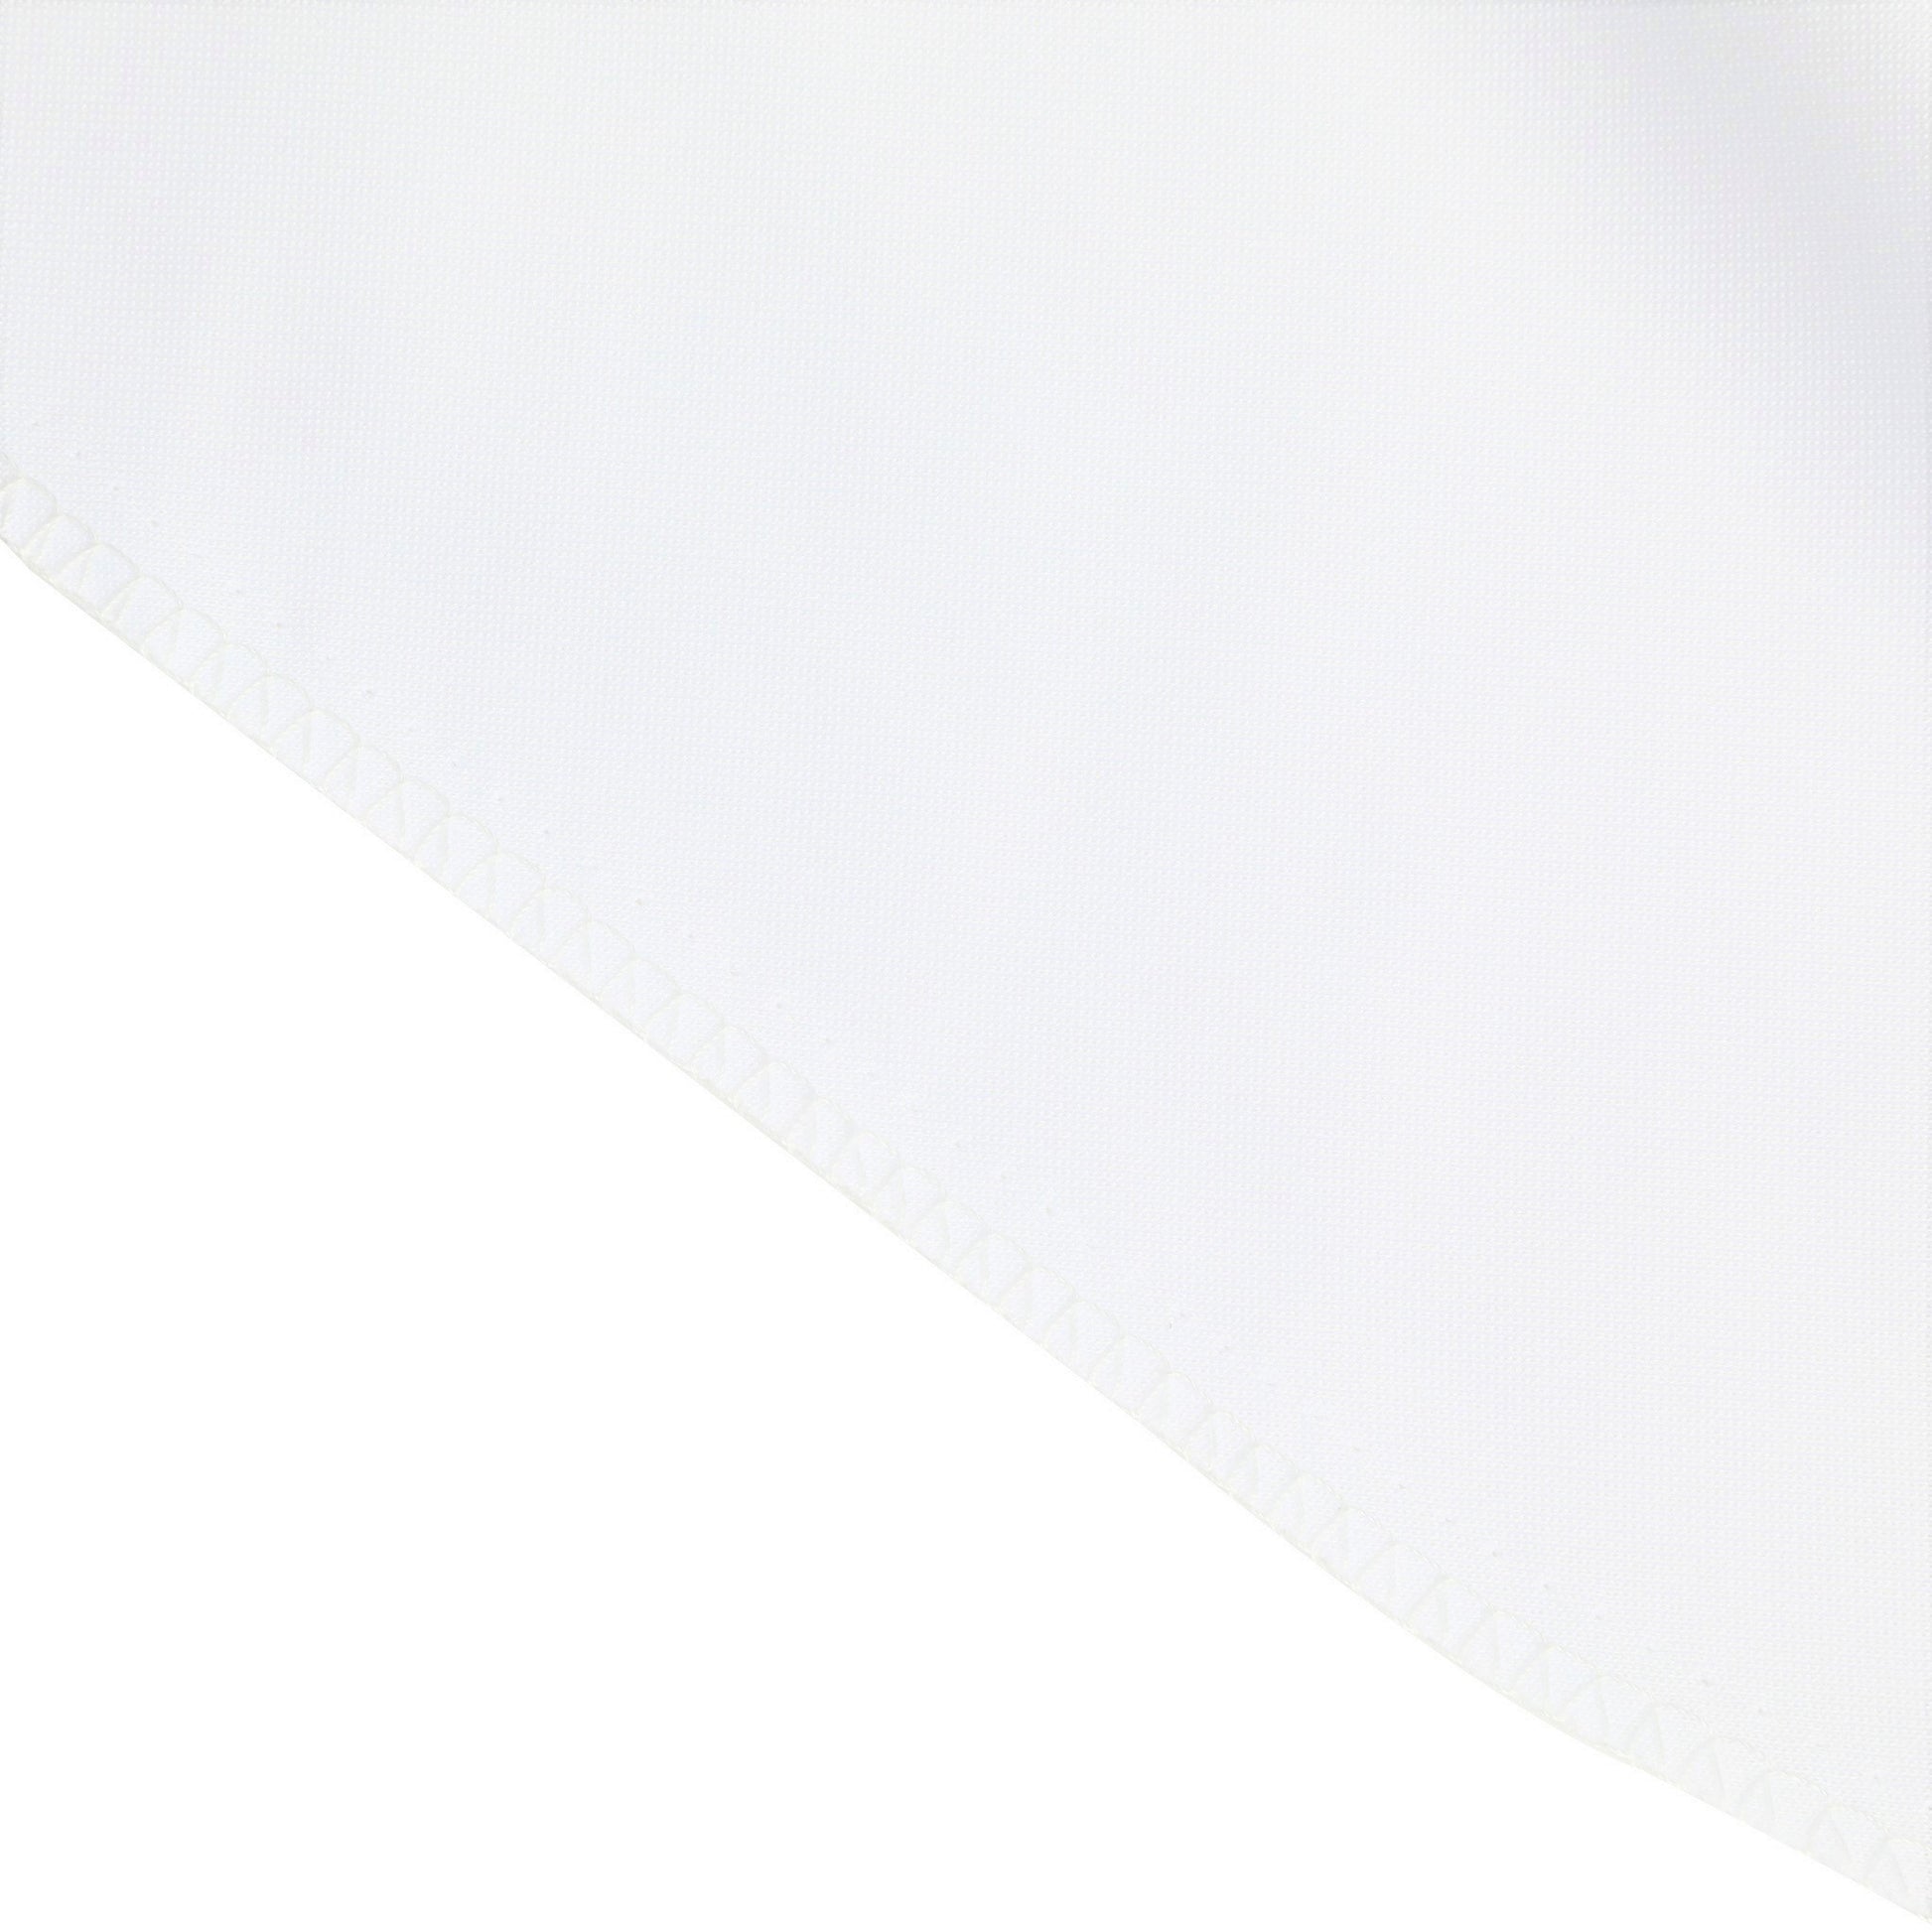 Scuba 132" Round Tablecloth - White